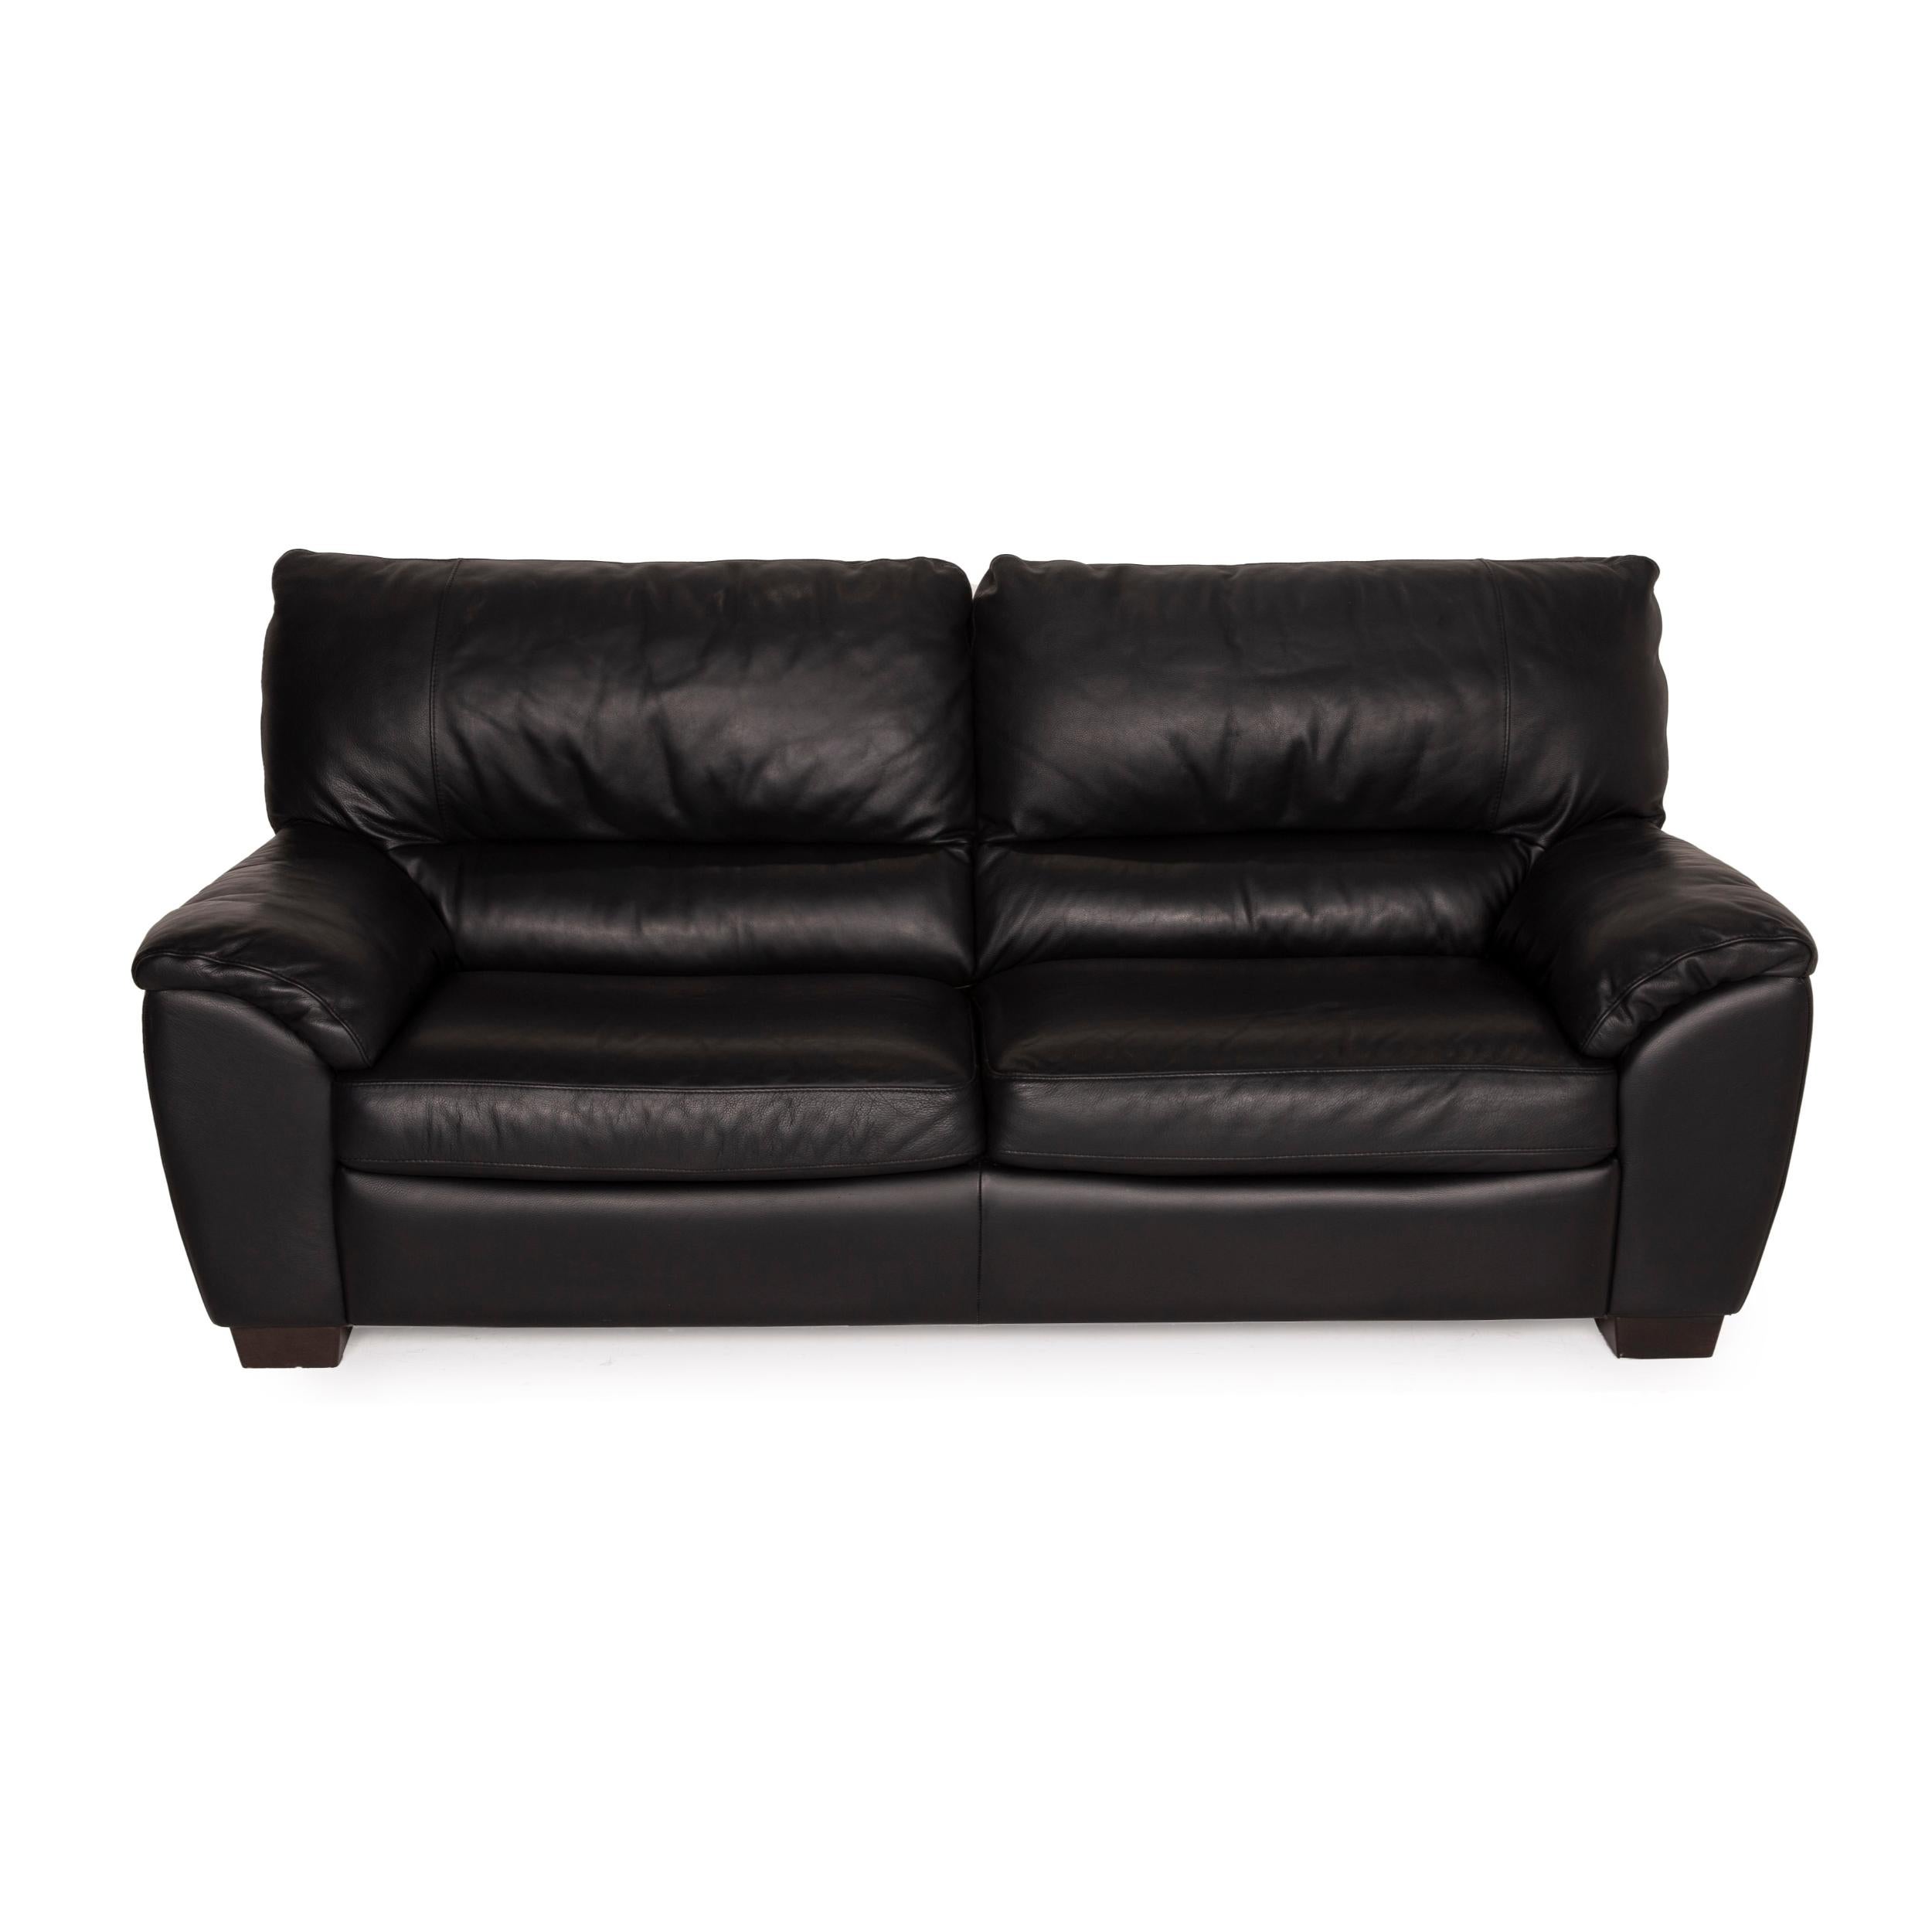 Natuzzi Two-Seater Leather Sofa Set Black 2x Two-Seater 1